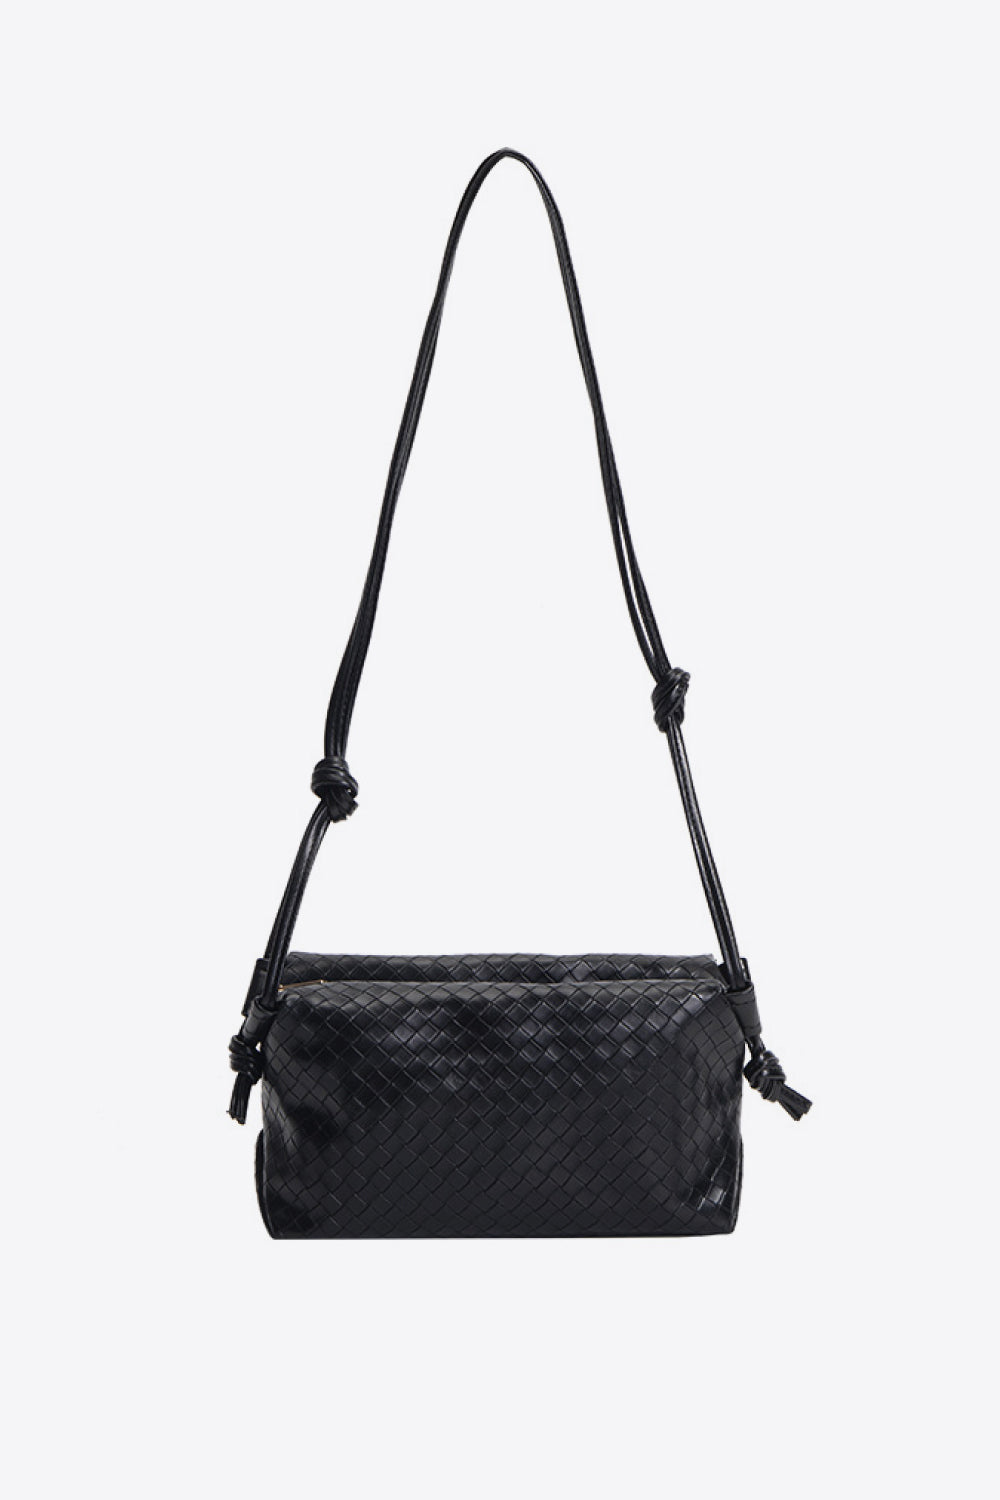 White Smoke PU Leather Knot Detail Shoulder Bag Handbags